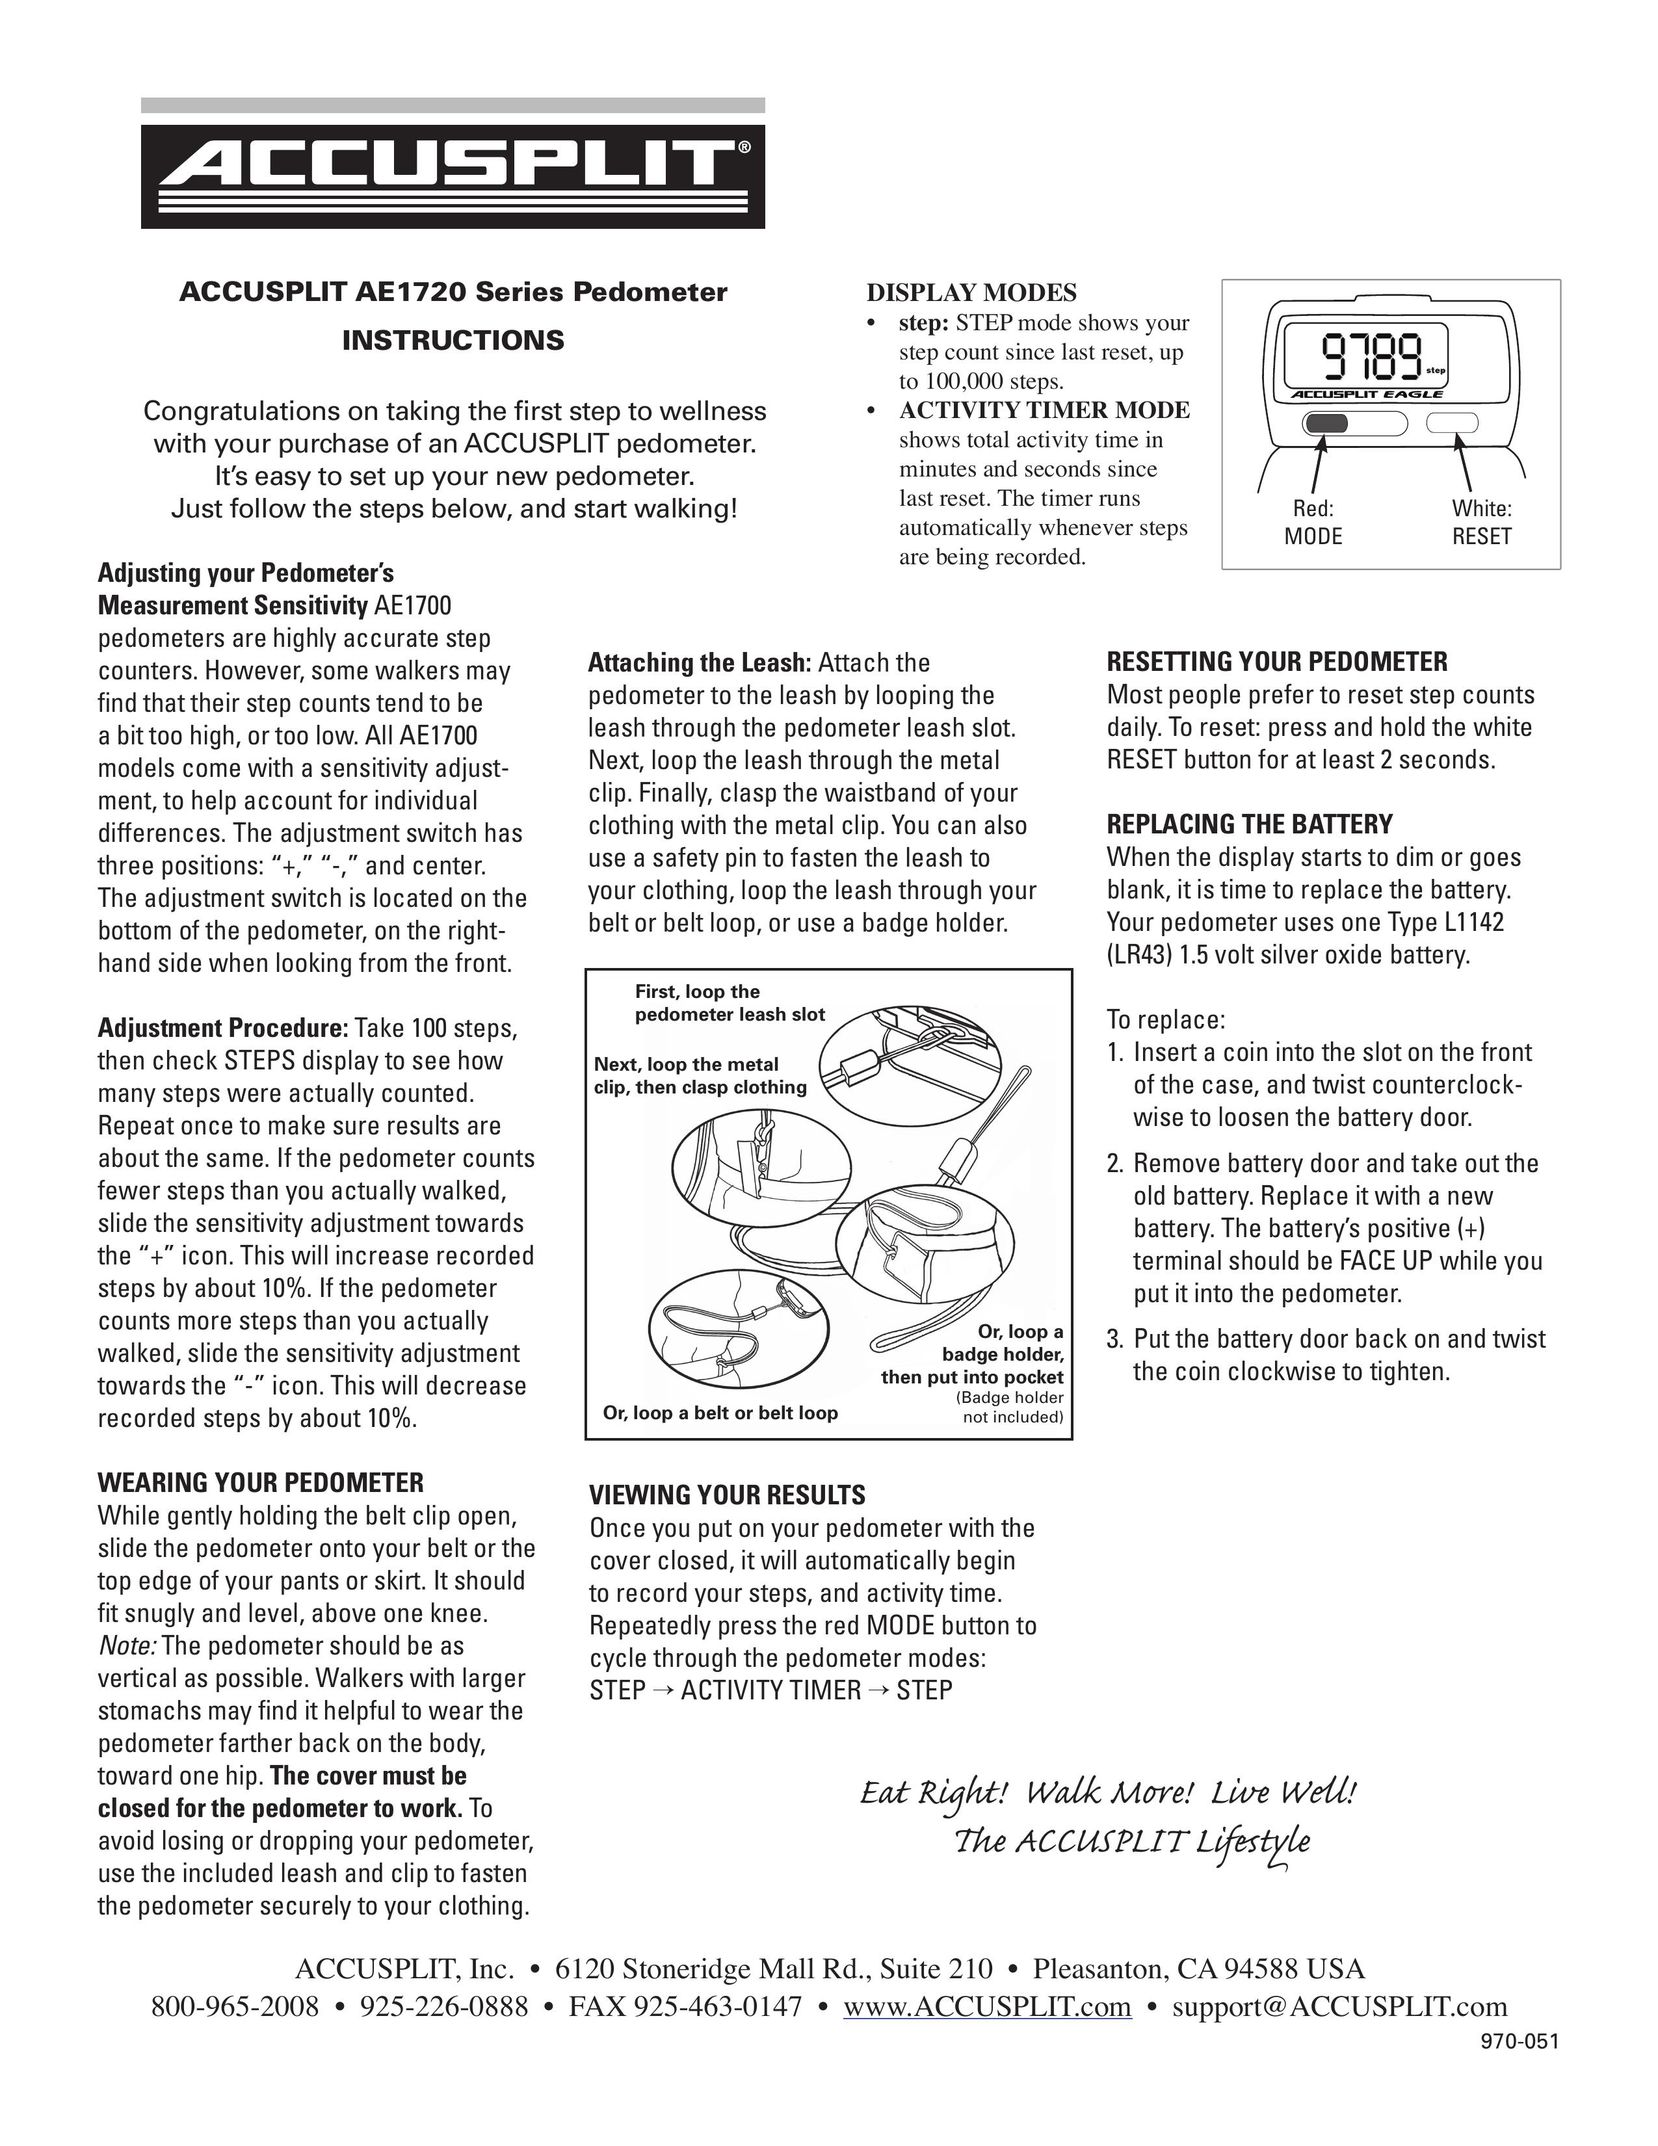 Accusplit AE1720 Fitness Electronics User Manual